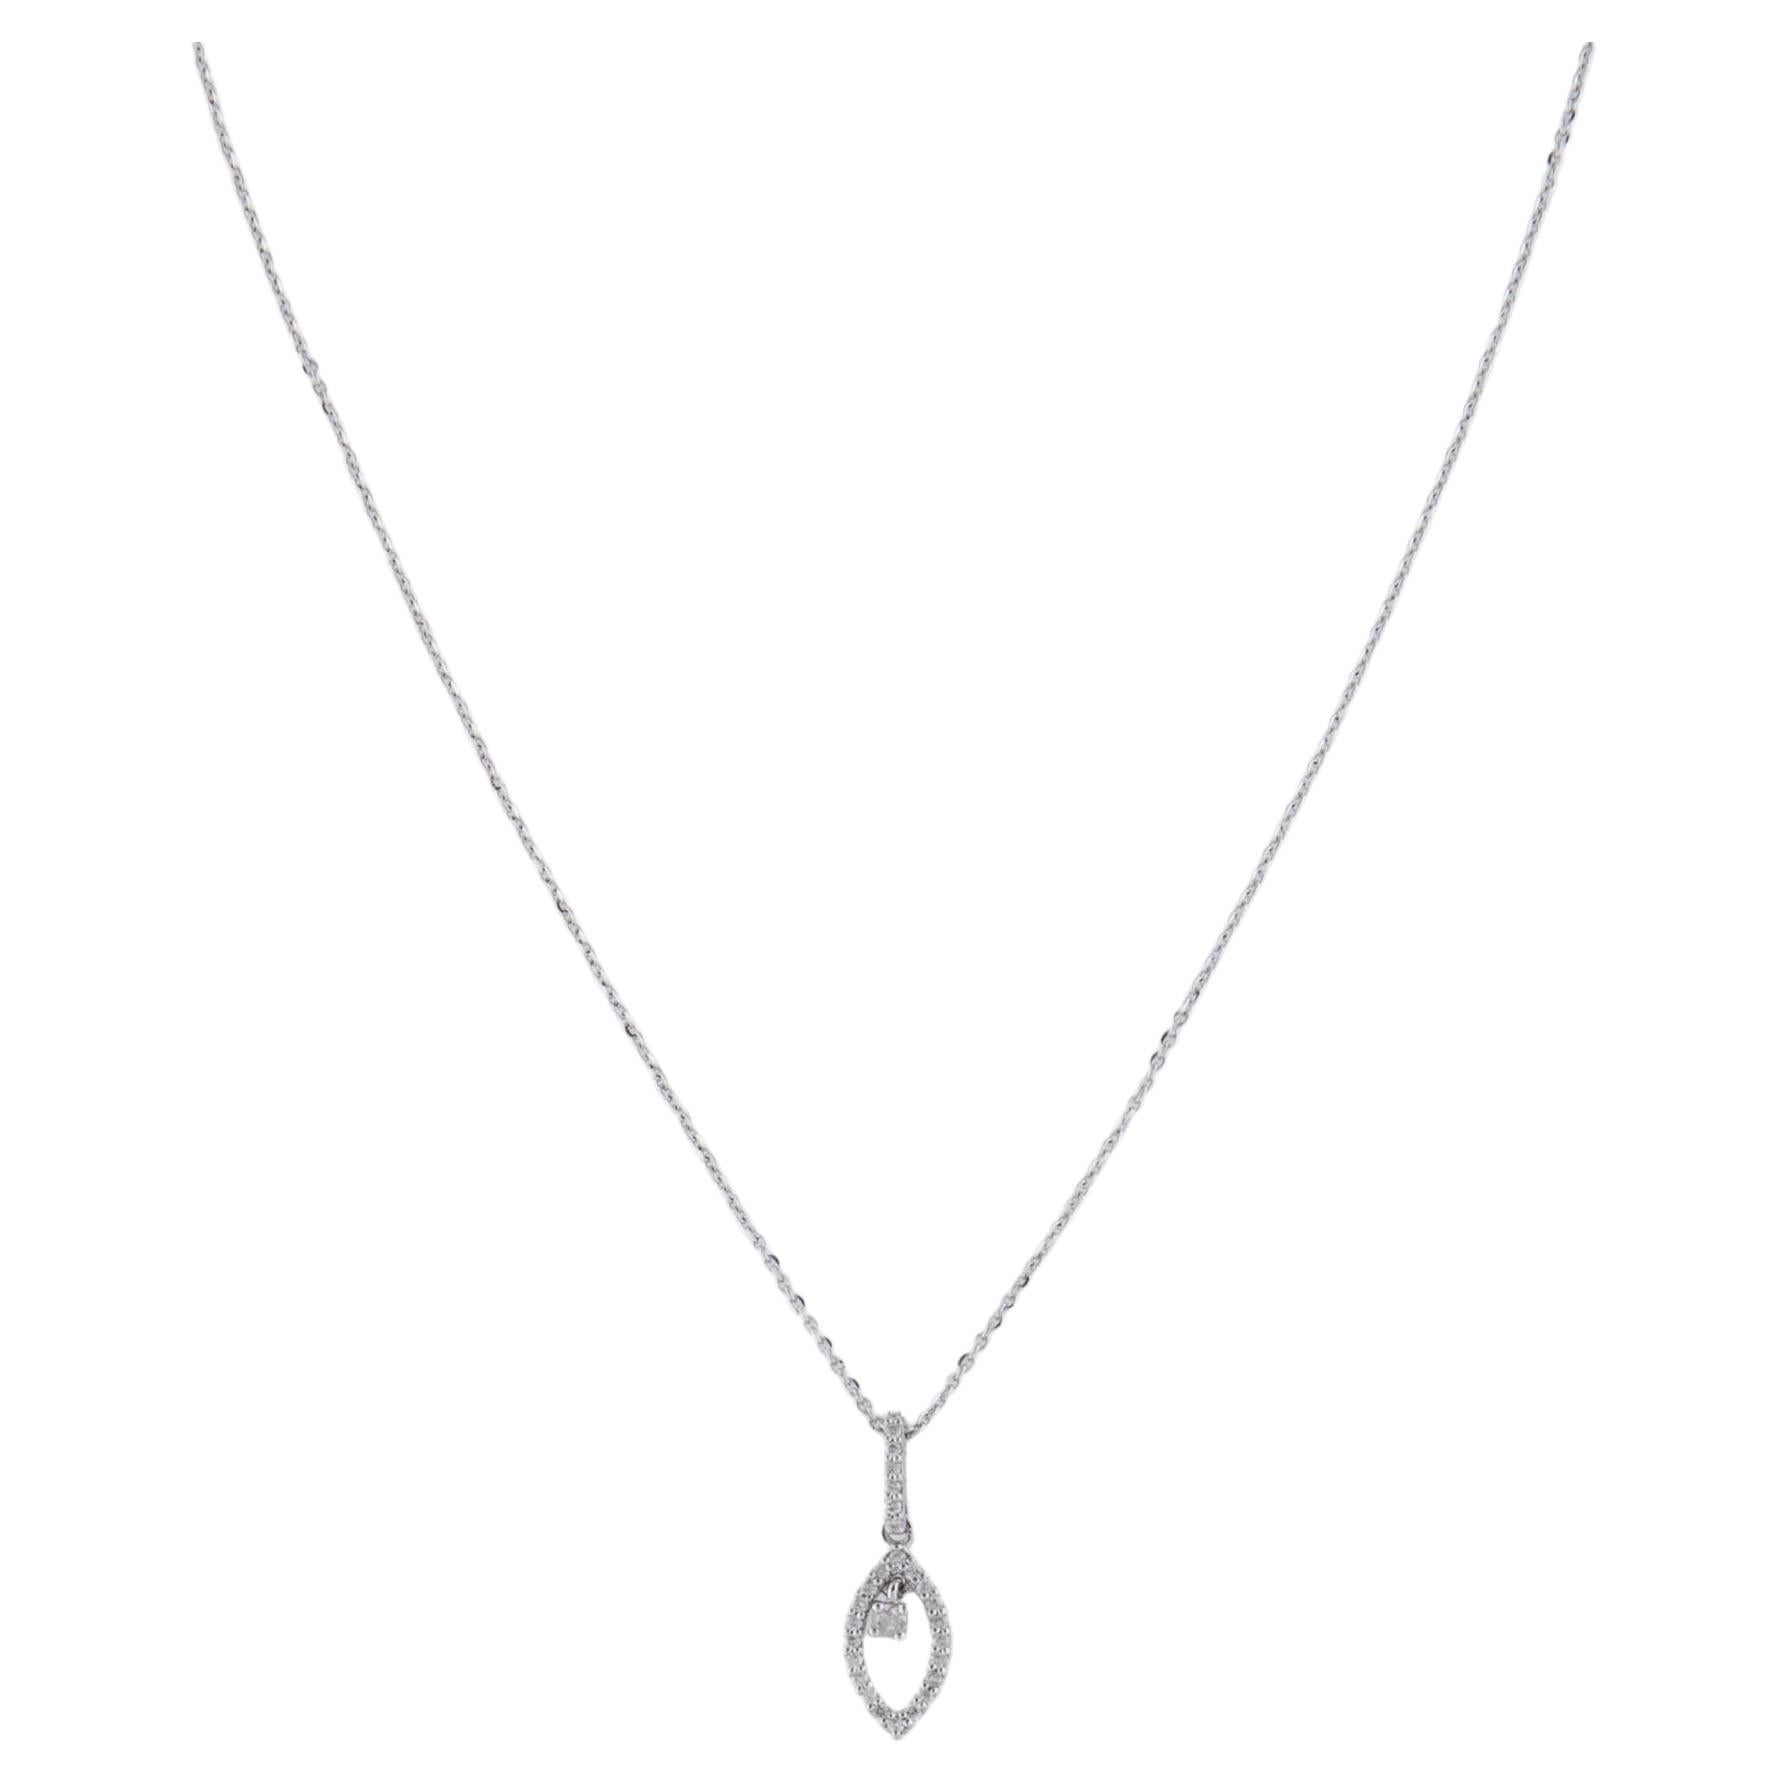 14K Diamond Pendant Necklace - Elegant & Timeless Statement Jewelry Piece